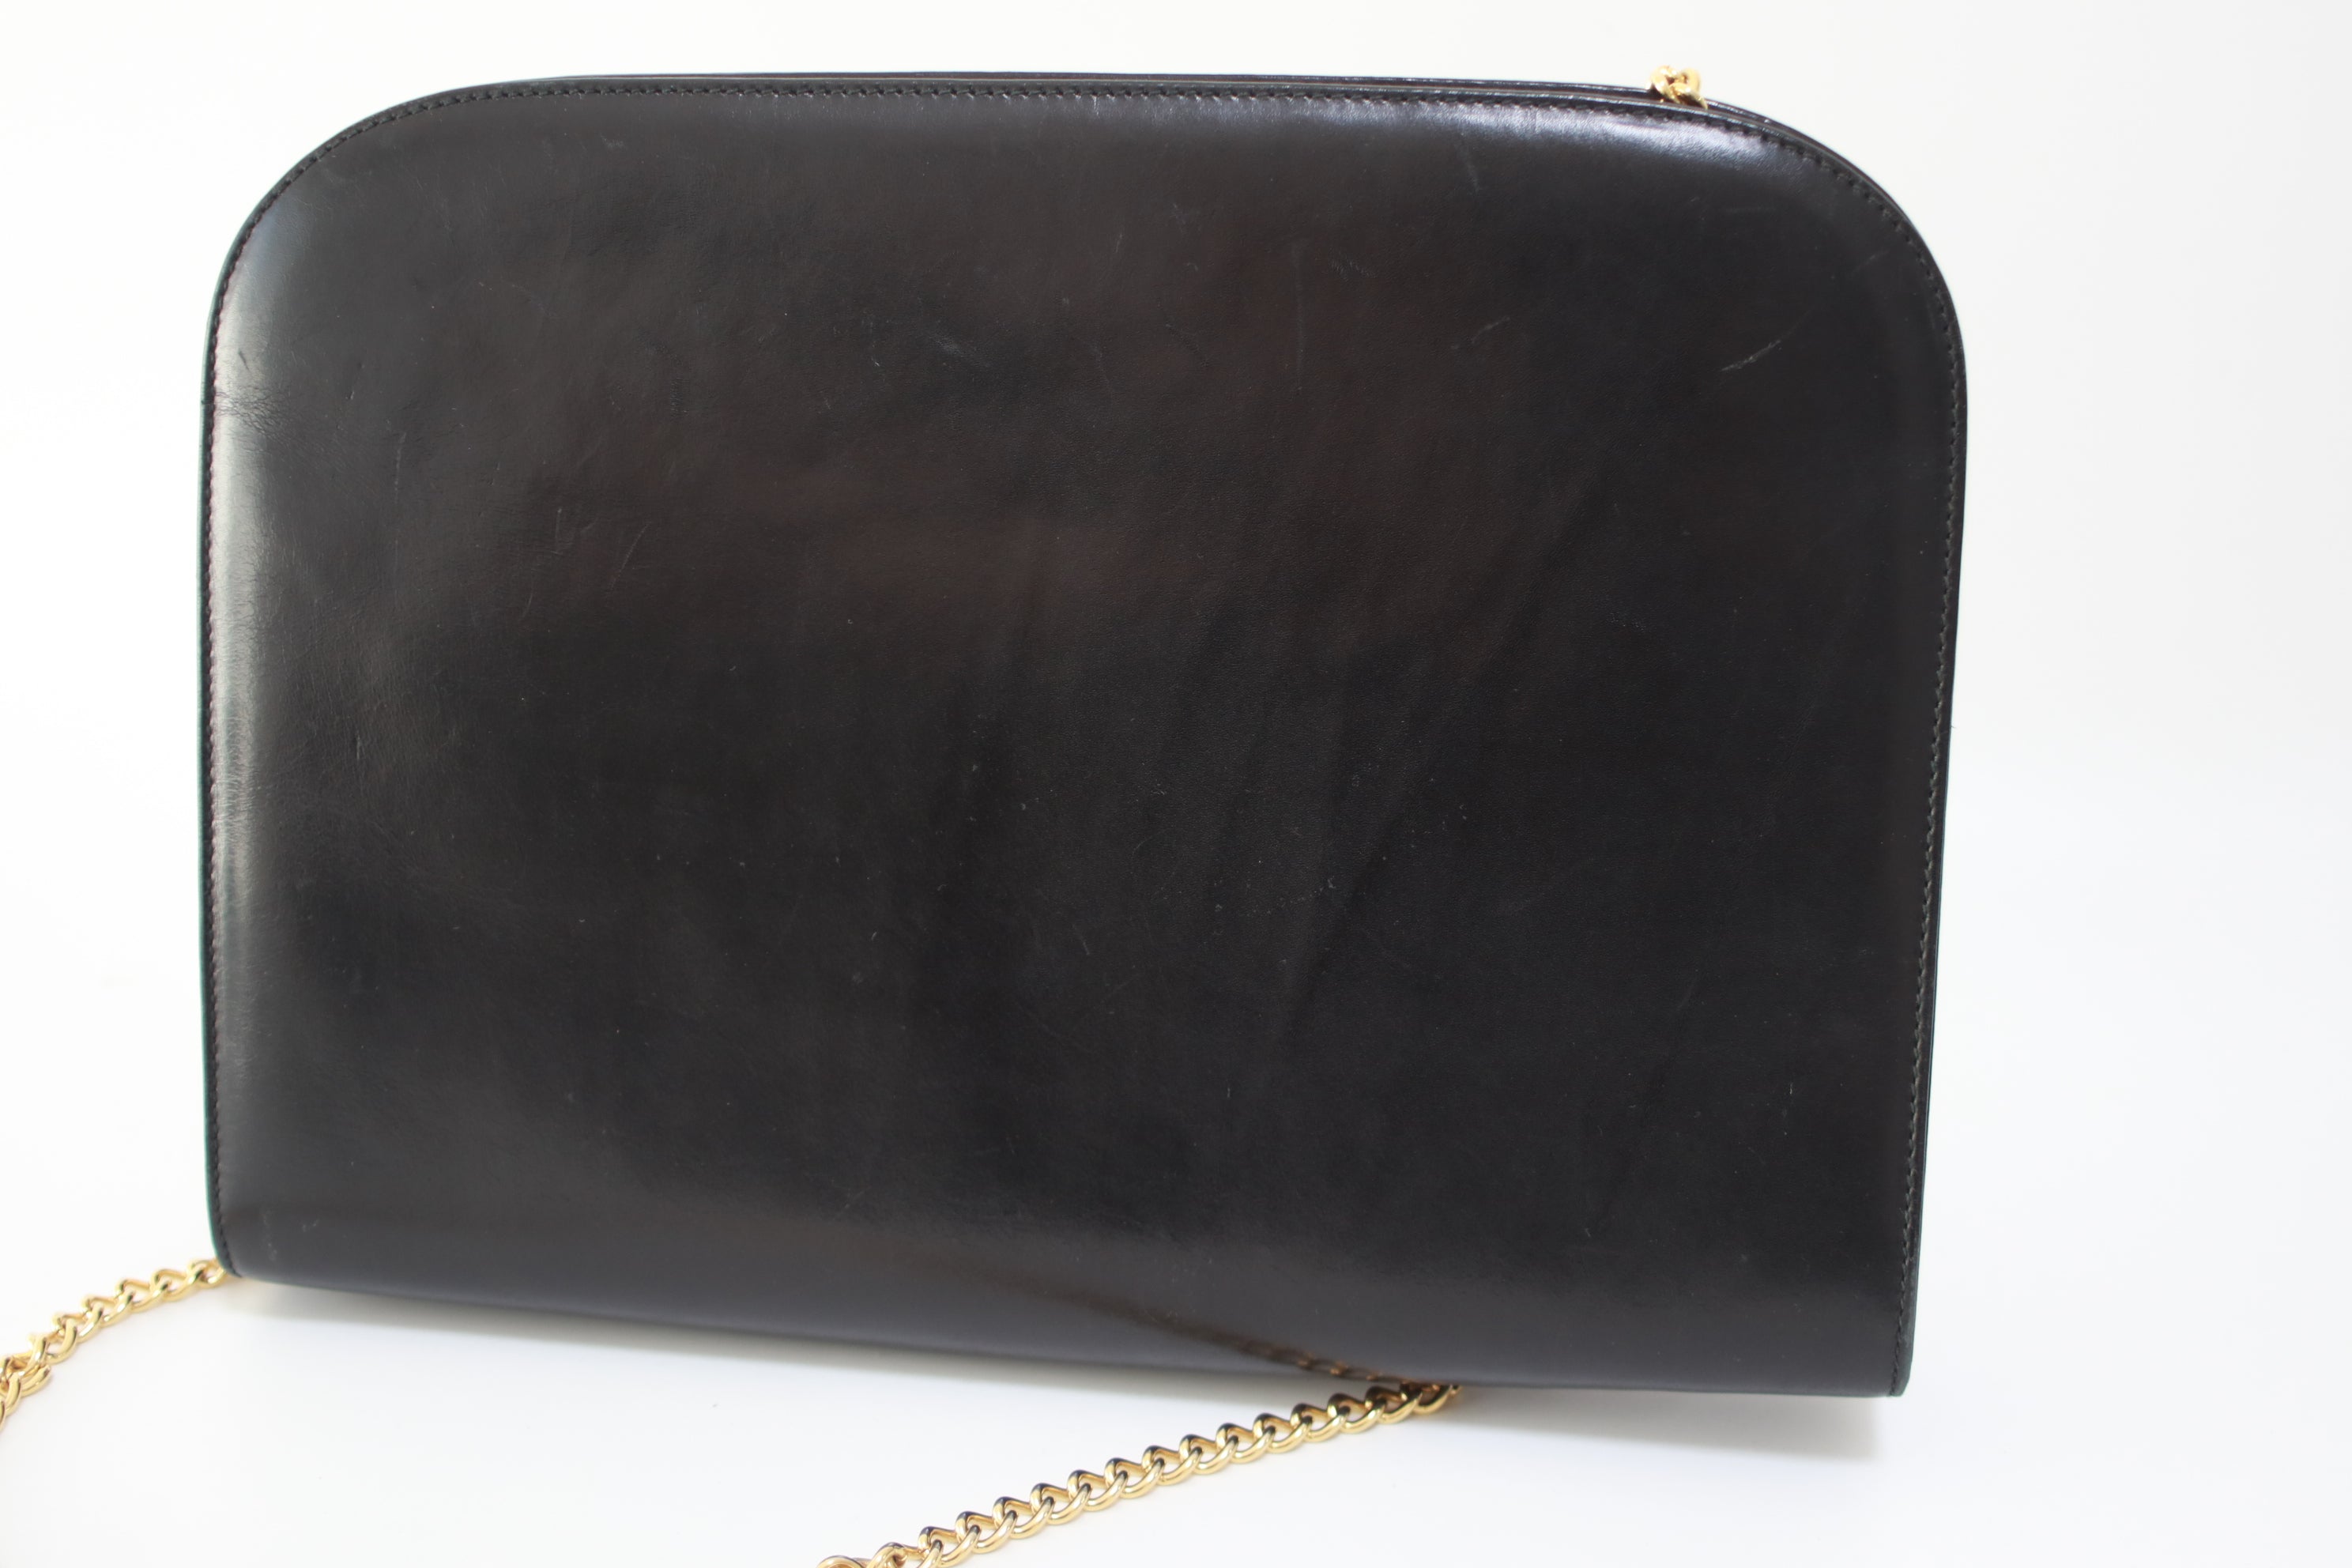 Ferragamo Chain Shoulder Bag Black Used (6918)